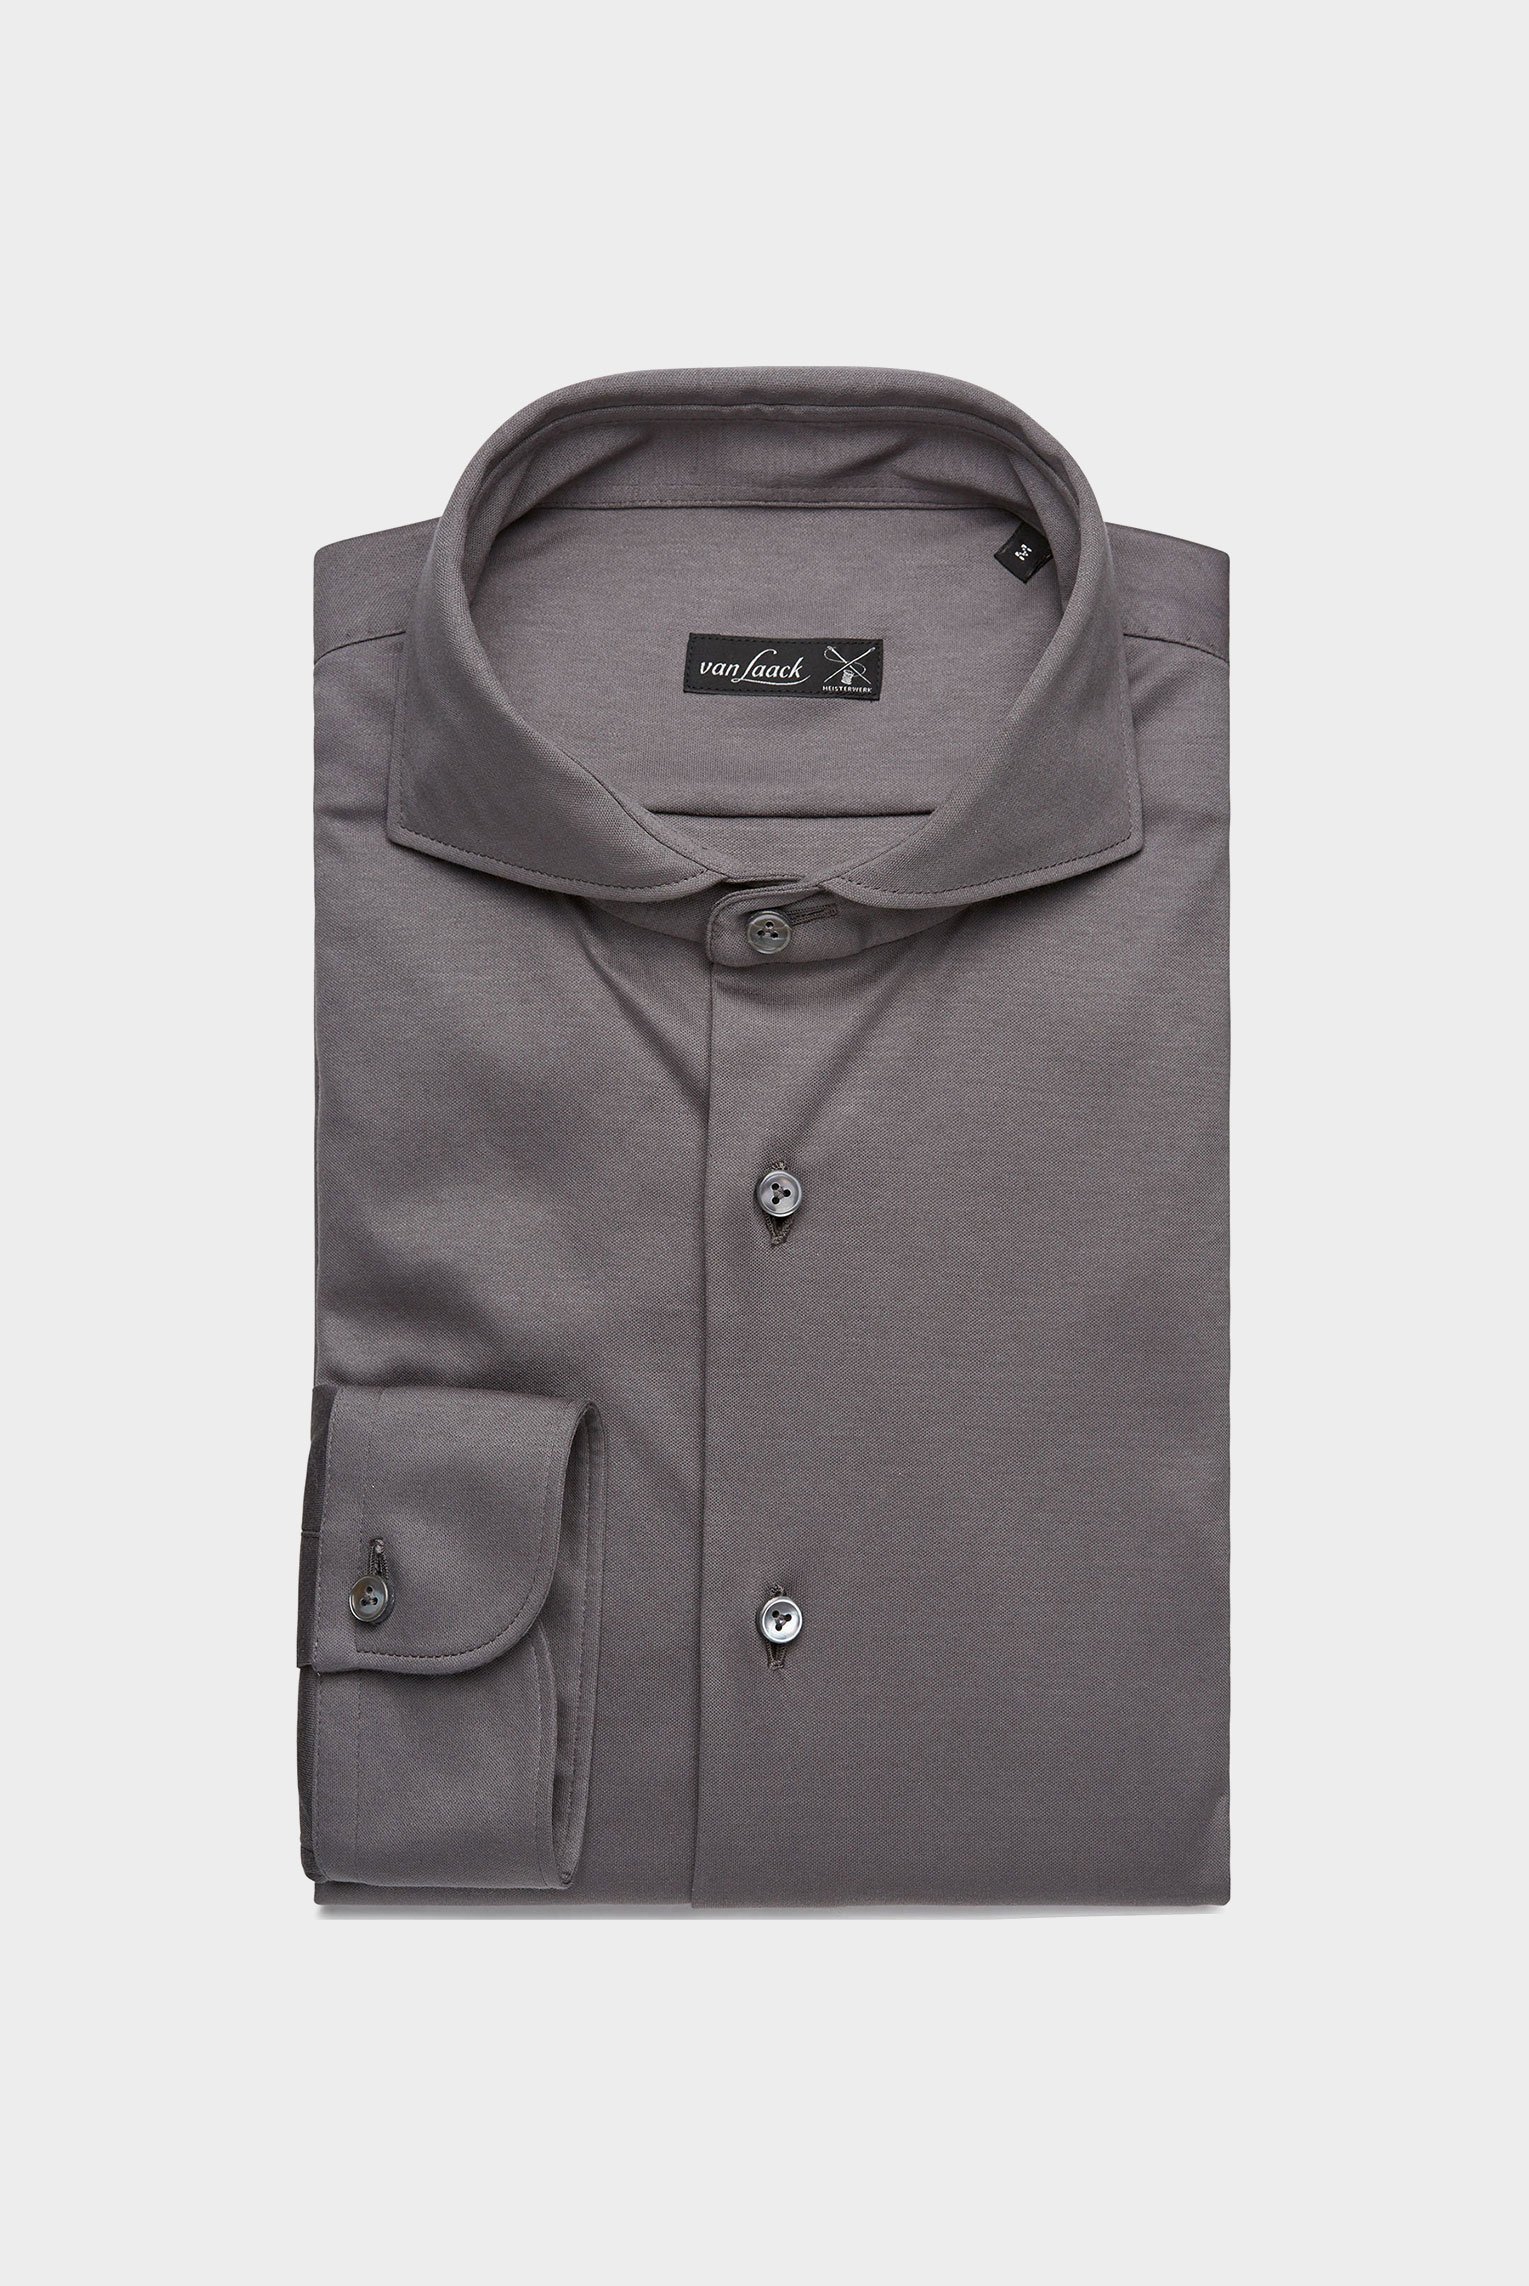 Casual Hemden+Jersey Hemd aus Schweizer Baumwolle Tailor Fit+20.1683.UC.180031.070.S